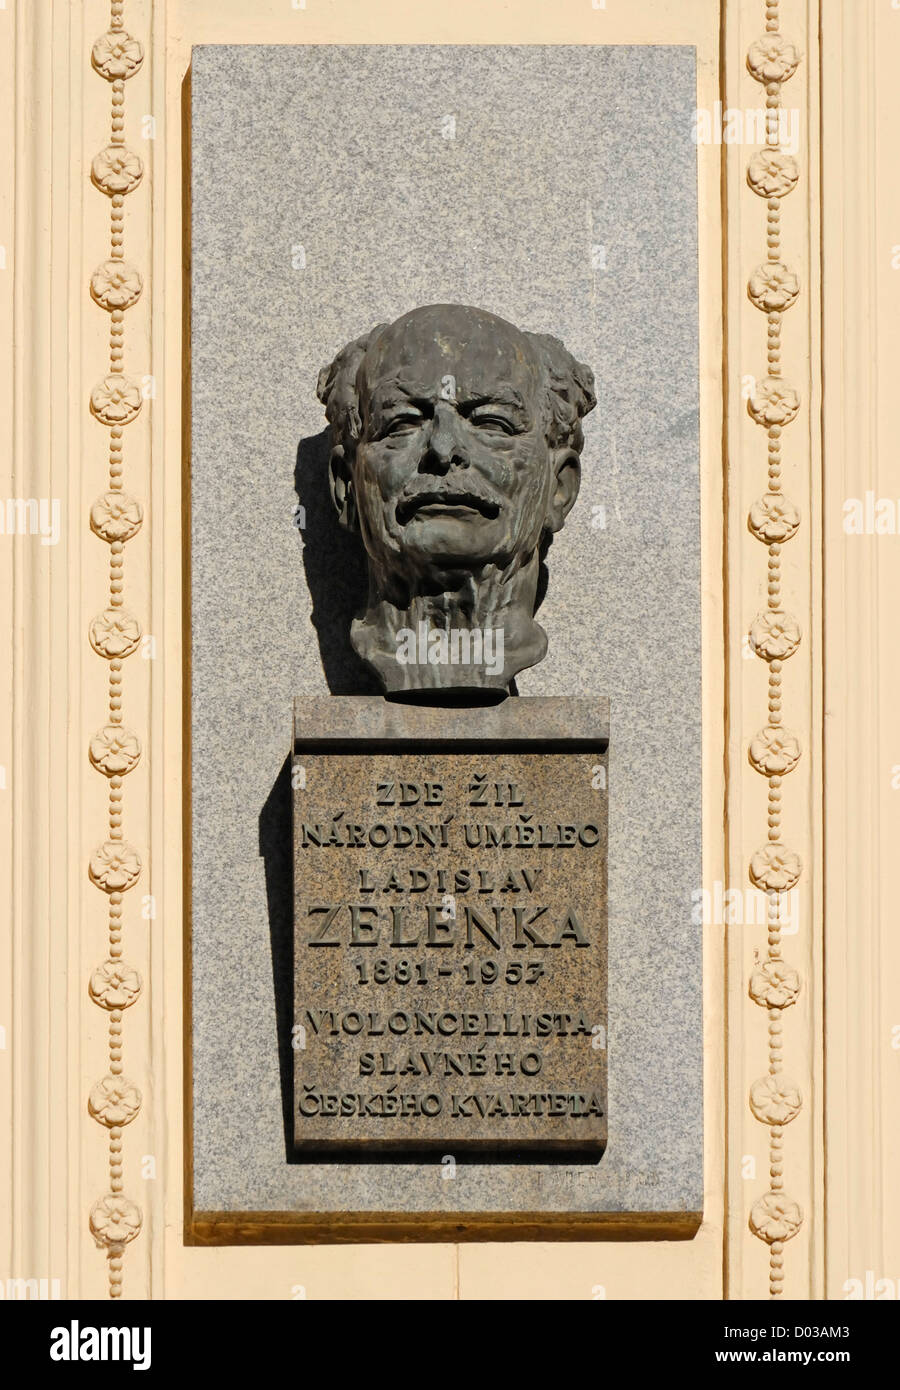 Praga, Repubblica Ceca. Una lapide commemorativa e busto in bronzo: Ladislav Zelenka (1881-1957, violoncellista) a Mostecká 14 Foto Stock